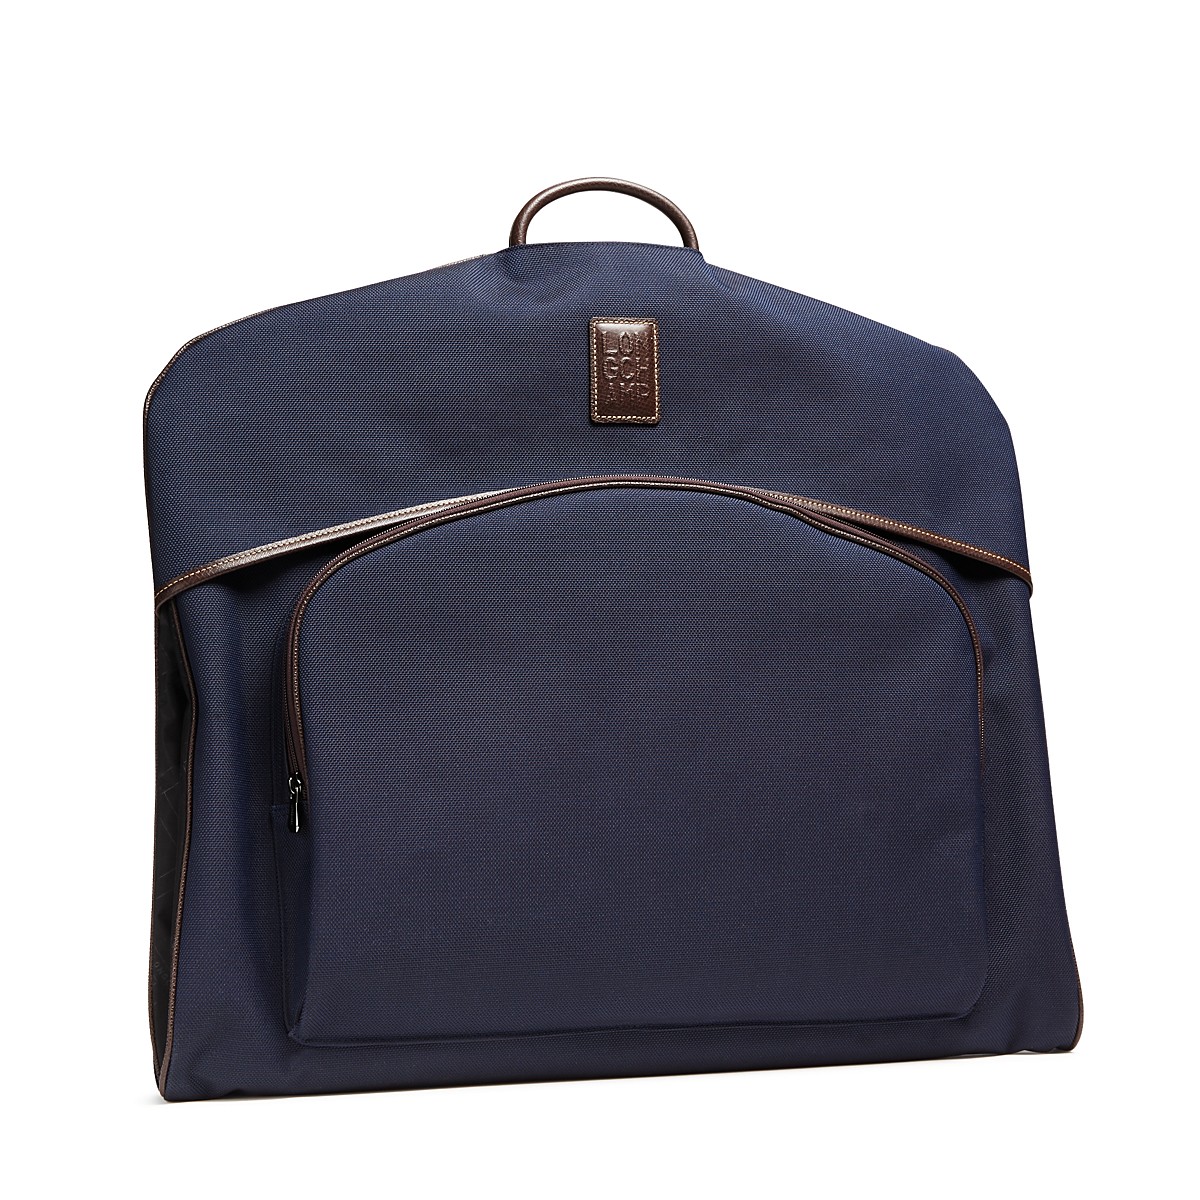 Longchamp Garmet Bag